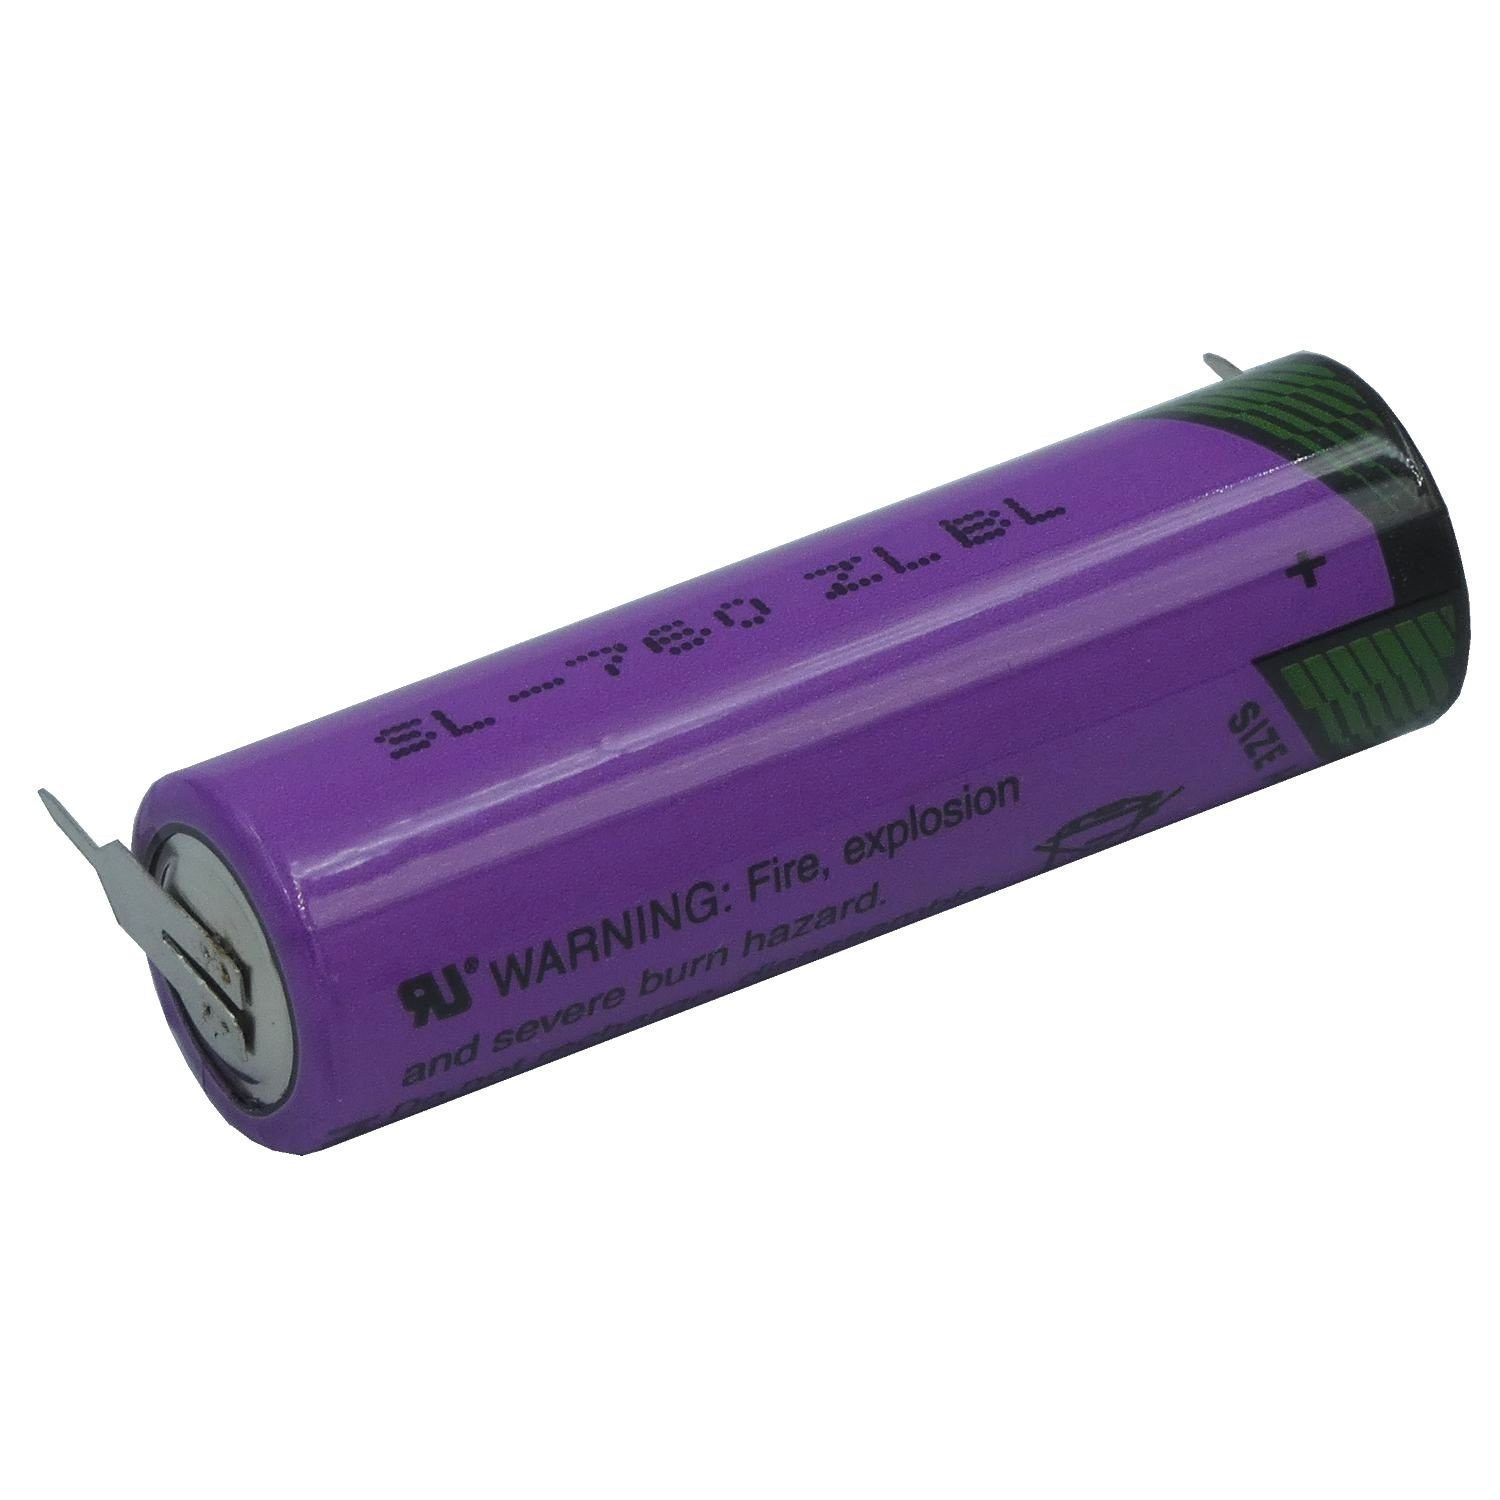 Tadiran TADIRAN 2er 3,6V SL-760PR Batterie 2100mAh Print Batterie, Volt (3,6 V) mit Lithium Mignon